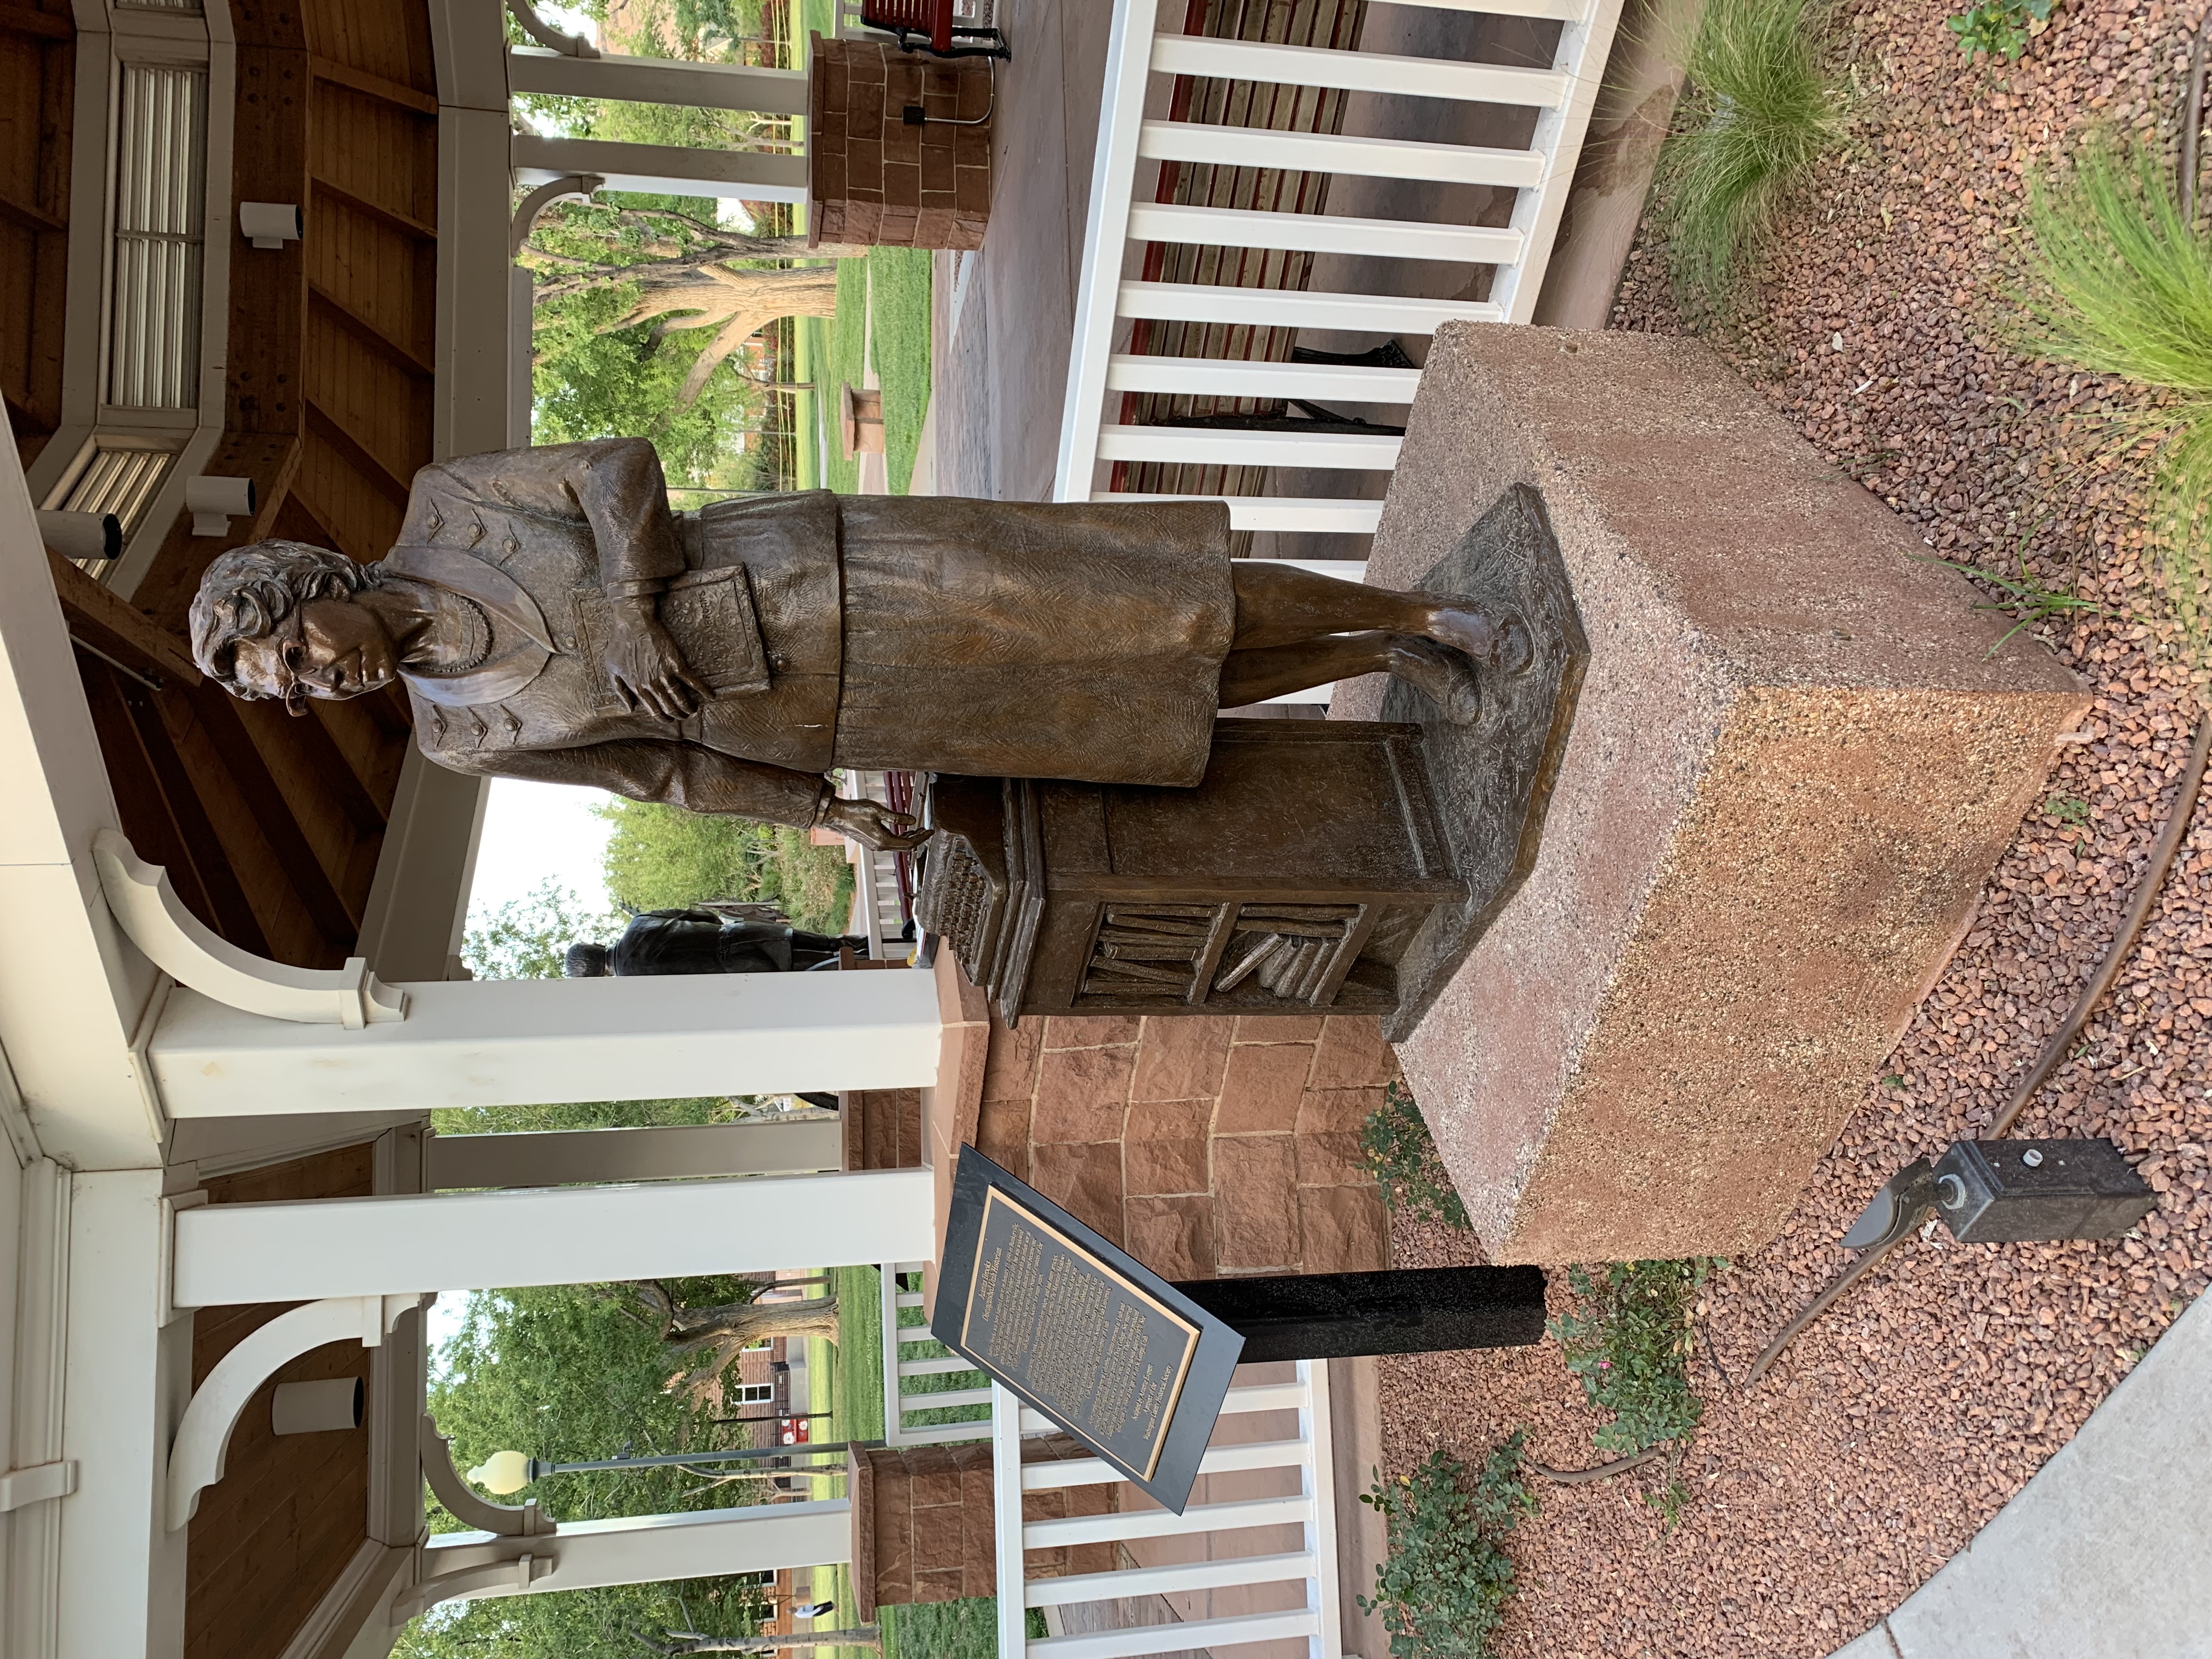 Juanita Brooks statue at the St George Historic Sculpture Garden